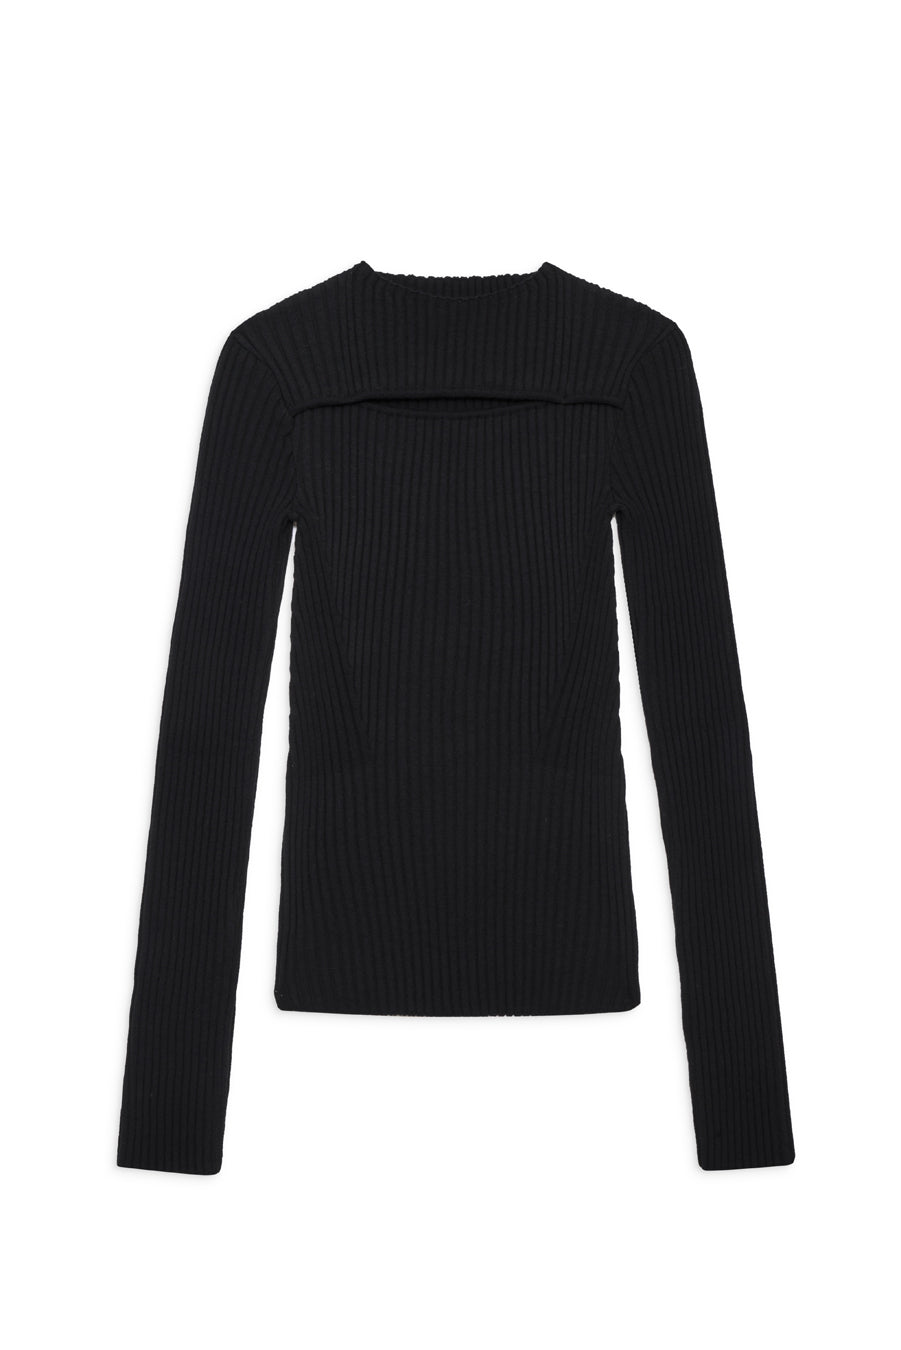 Lora Sweater in Black